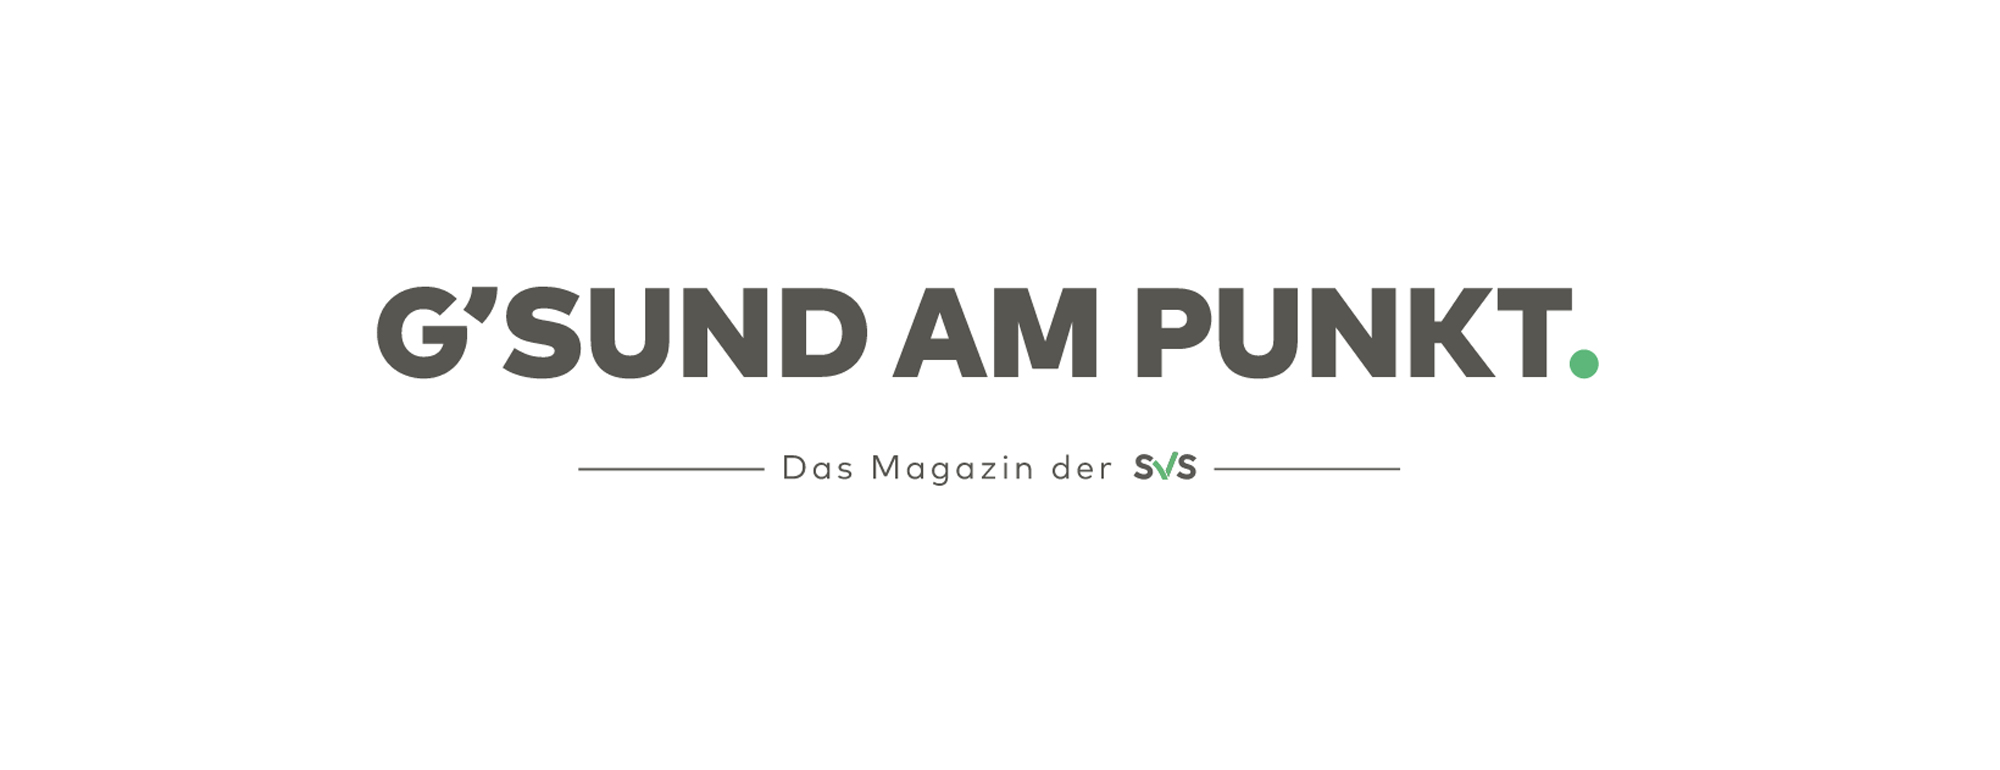 gsundampunkt-banner_1.png